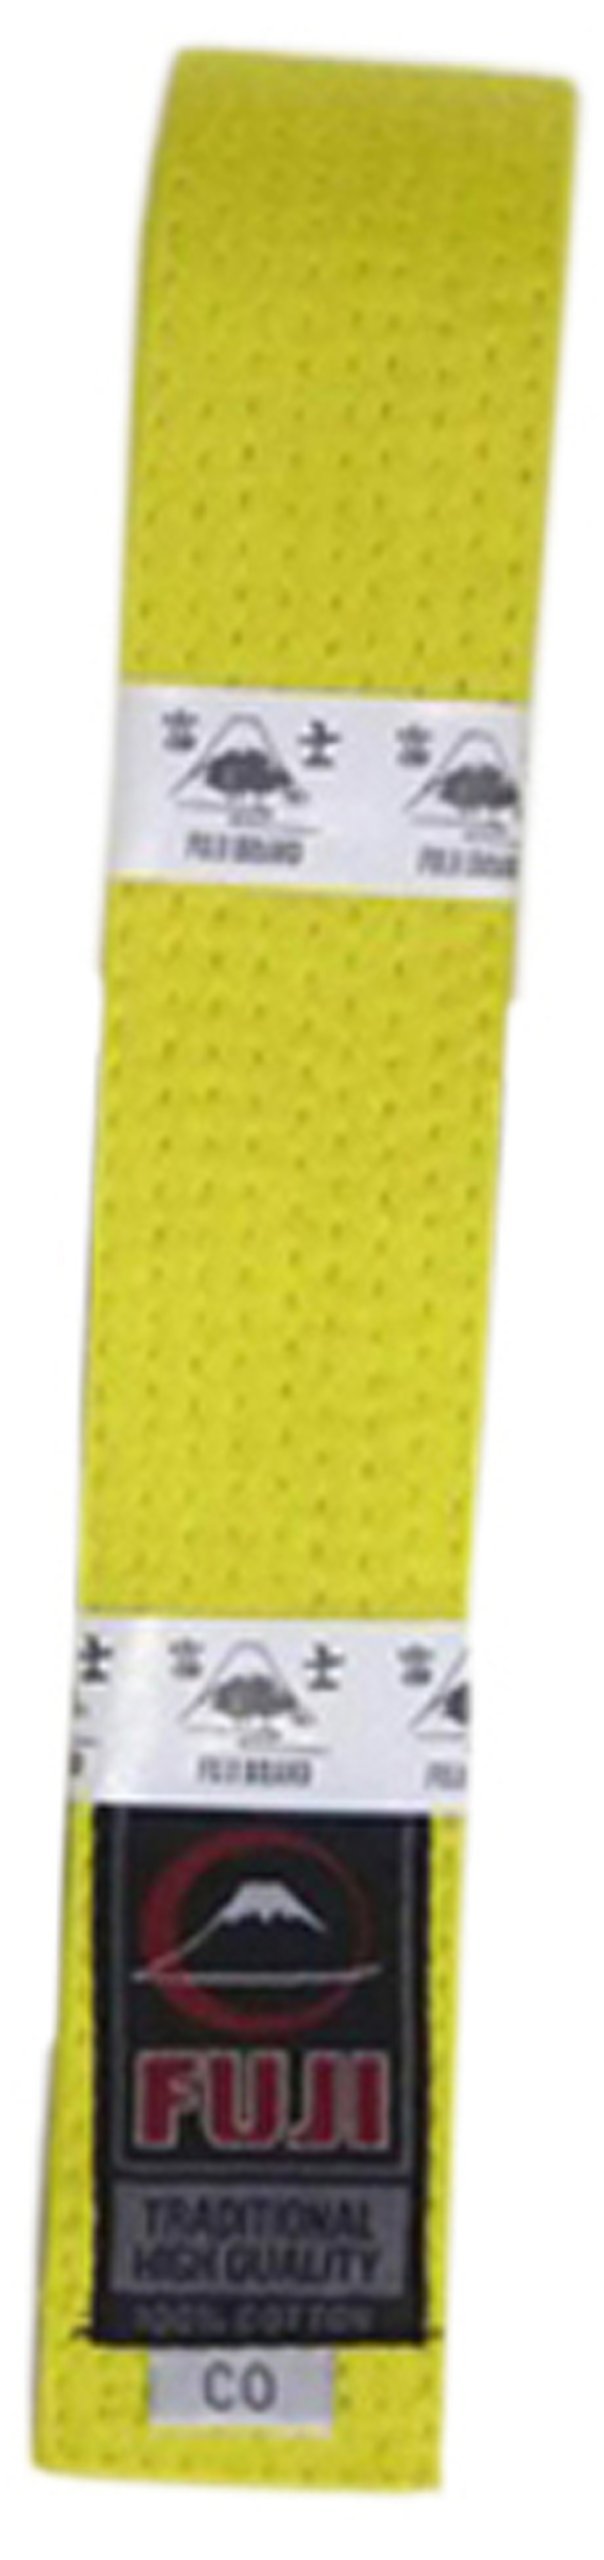 [AUSTRALIA] - Fuji BJJ Belt, Yellow, Size C0 